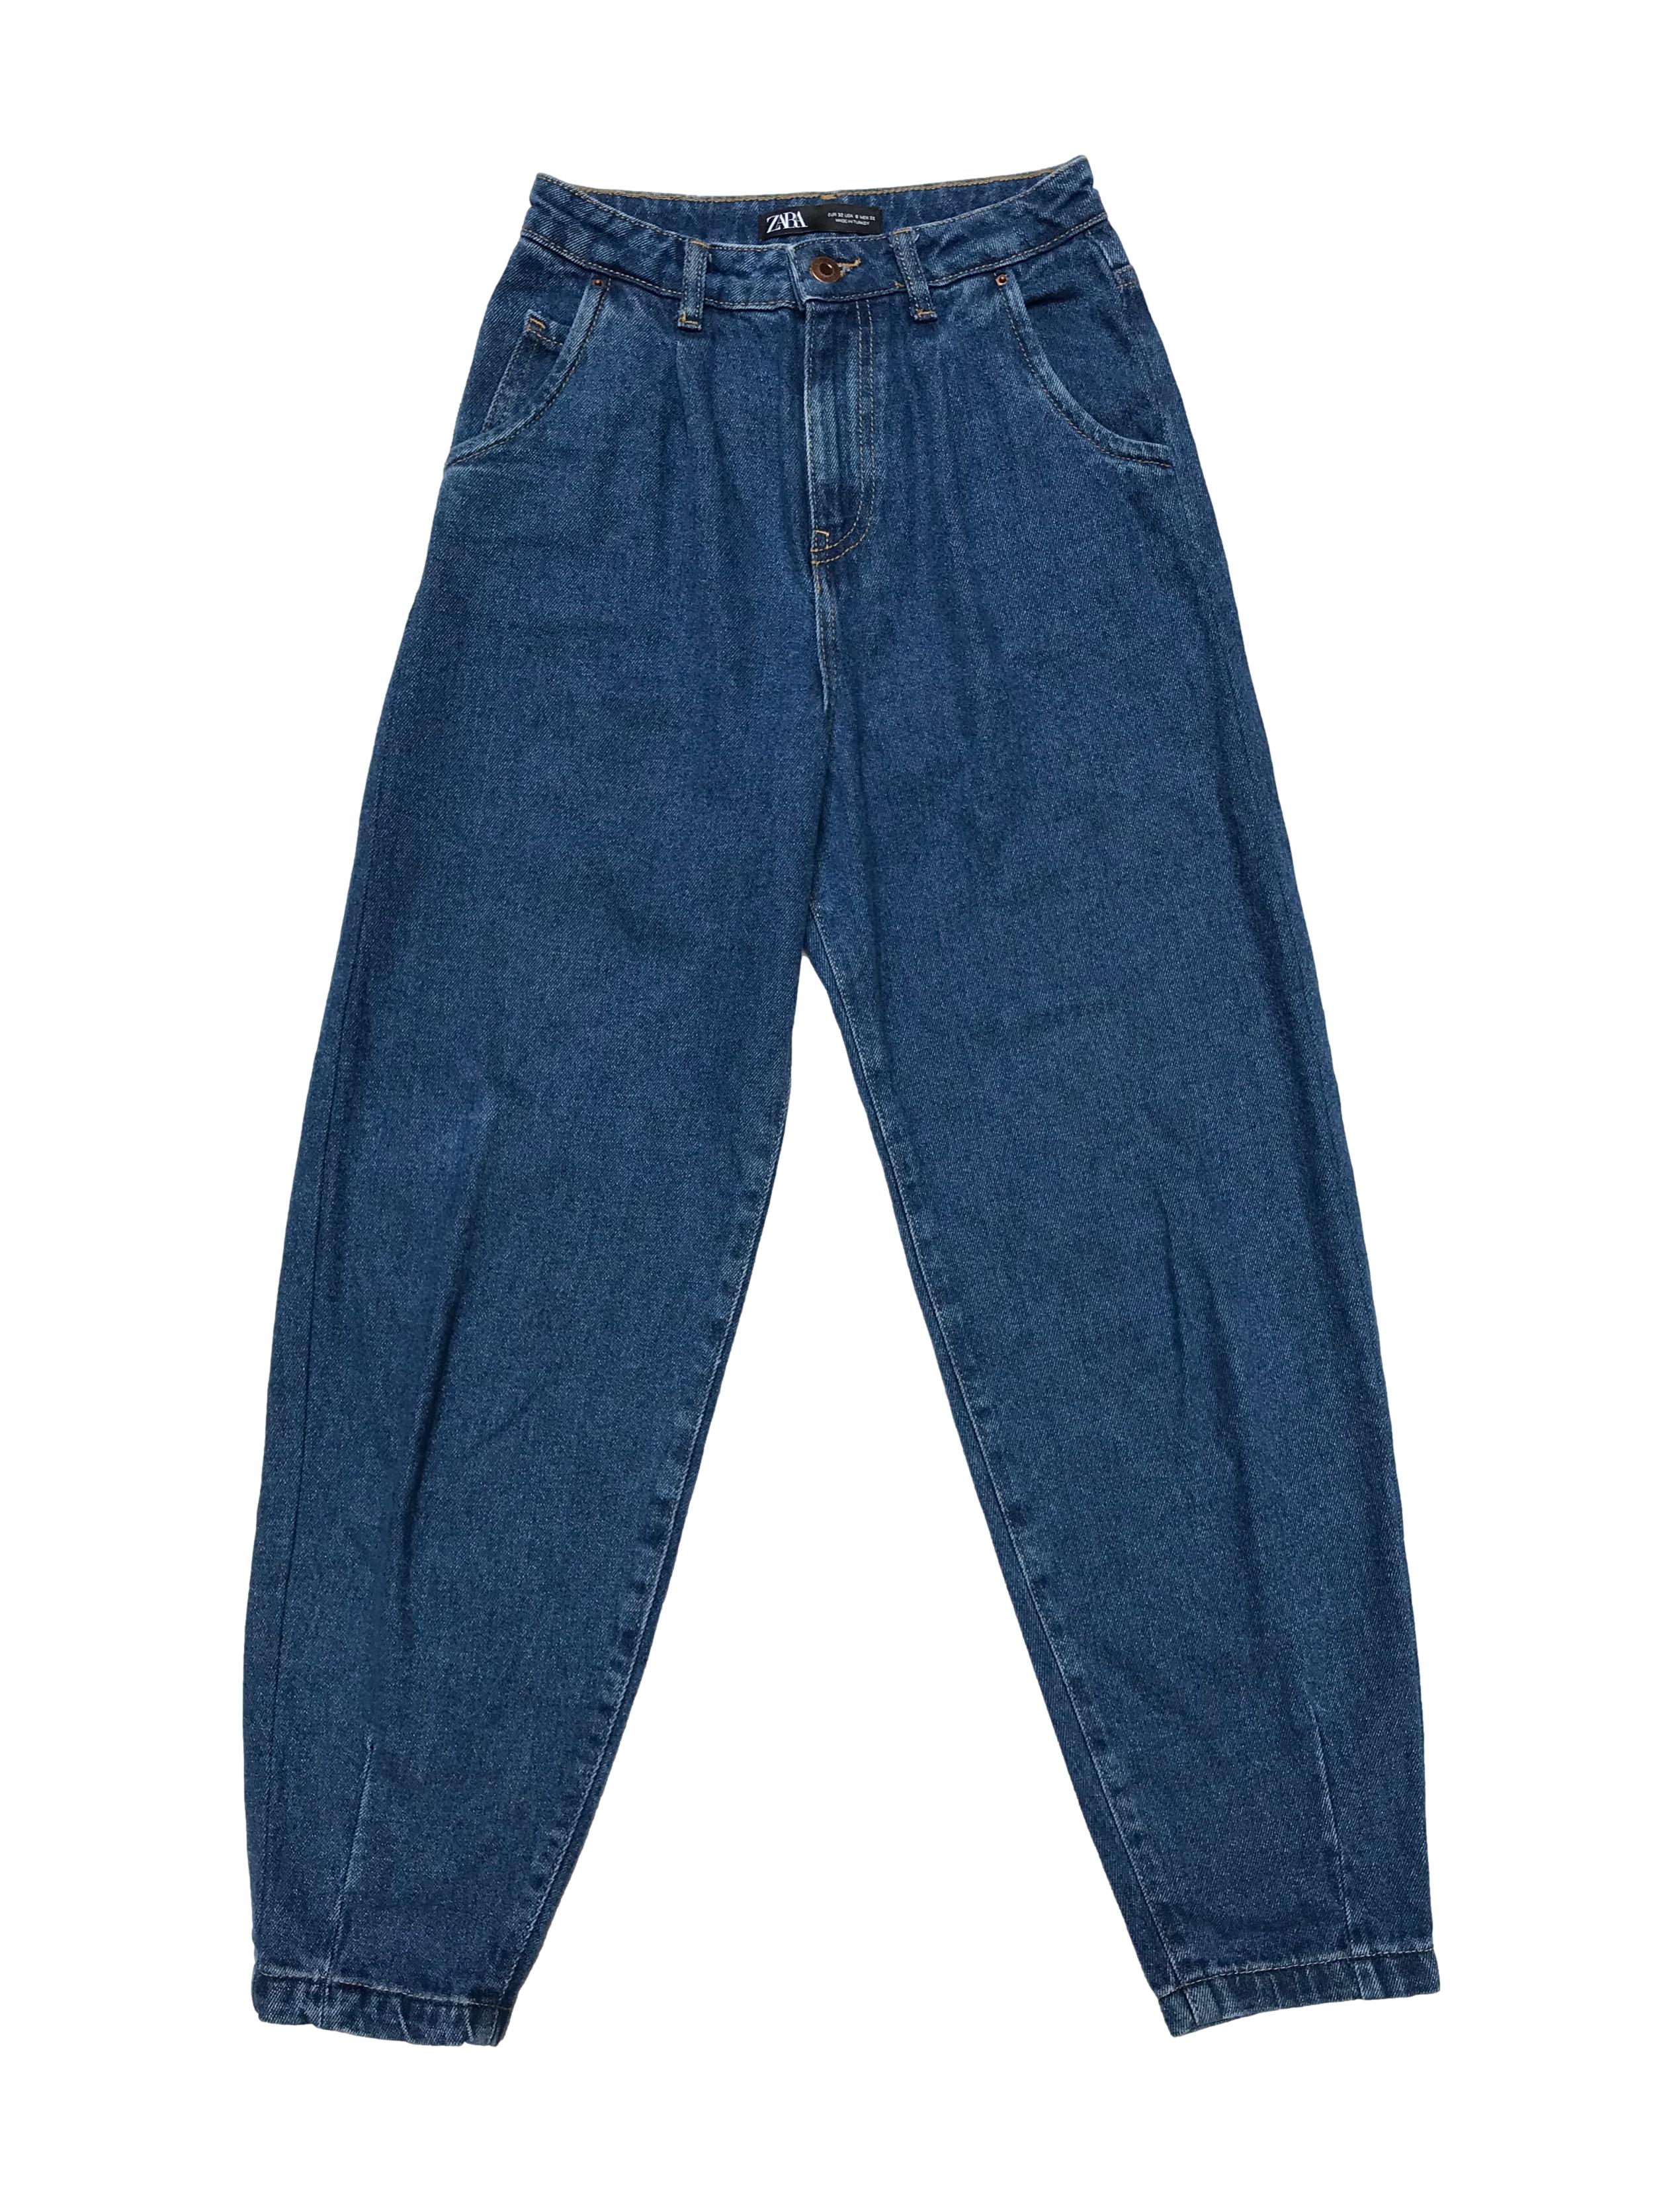 Slouchy jean Zara 100% algodón, tiro alto, modelo five pockets. Cintura 62cm Cadera 90cm Largo 98cm